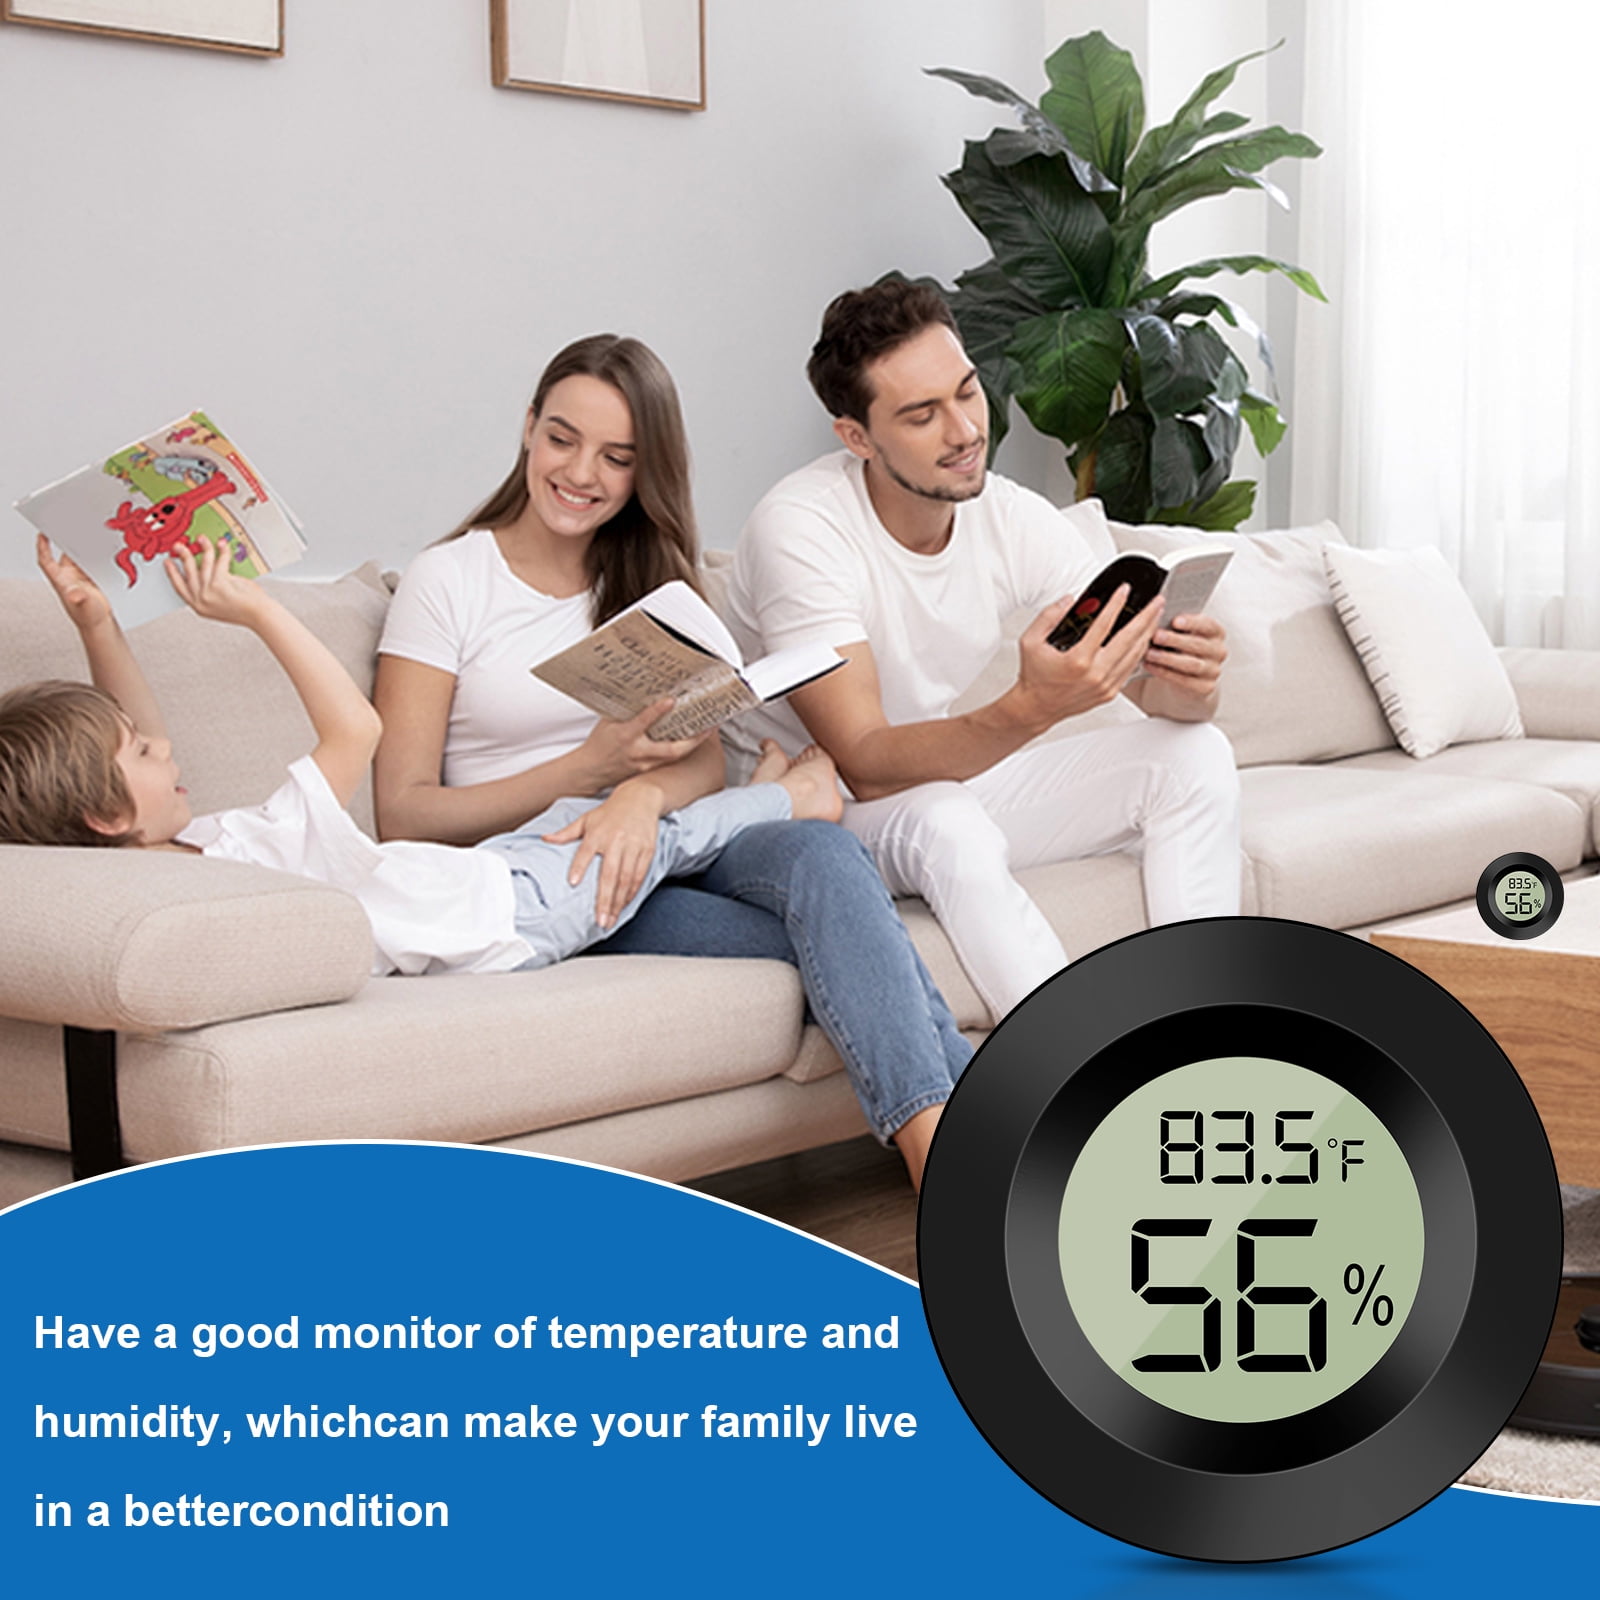 2pcs Digital Thermometers Hygrometers, EEEkit Mini Humidity ​Gauge for  Home, Greenhouse, Office